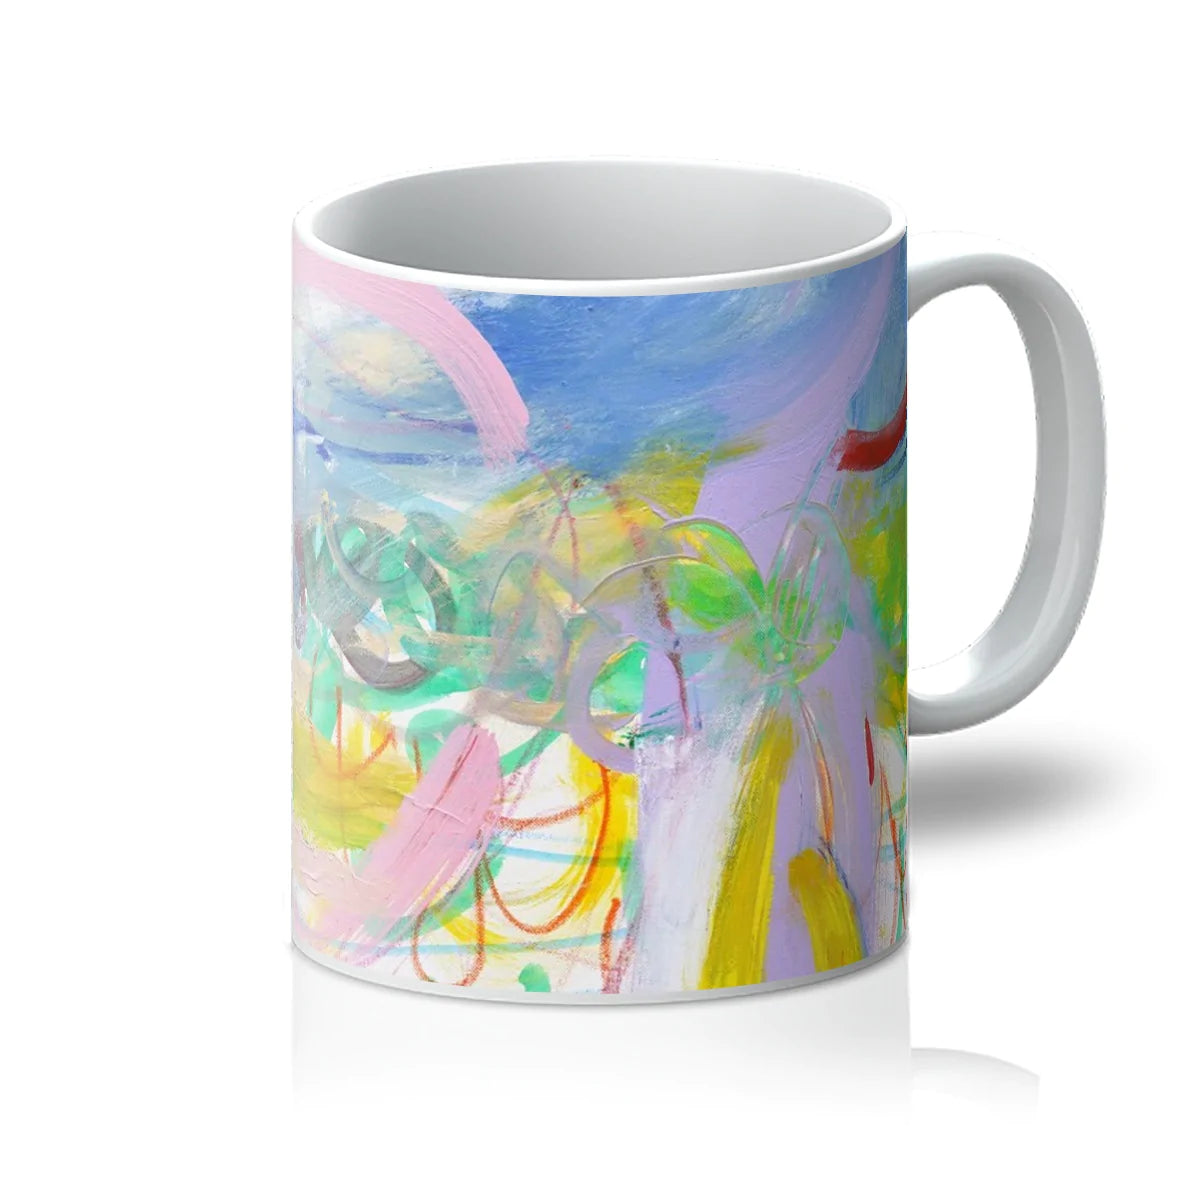 Let's Play Colourful Abstract Art Mug